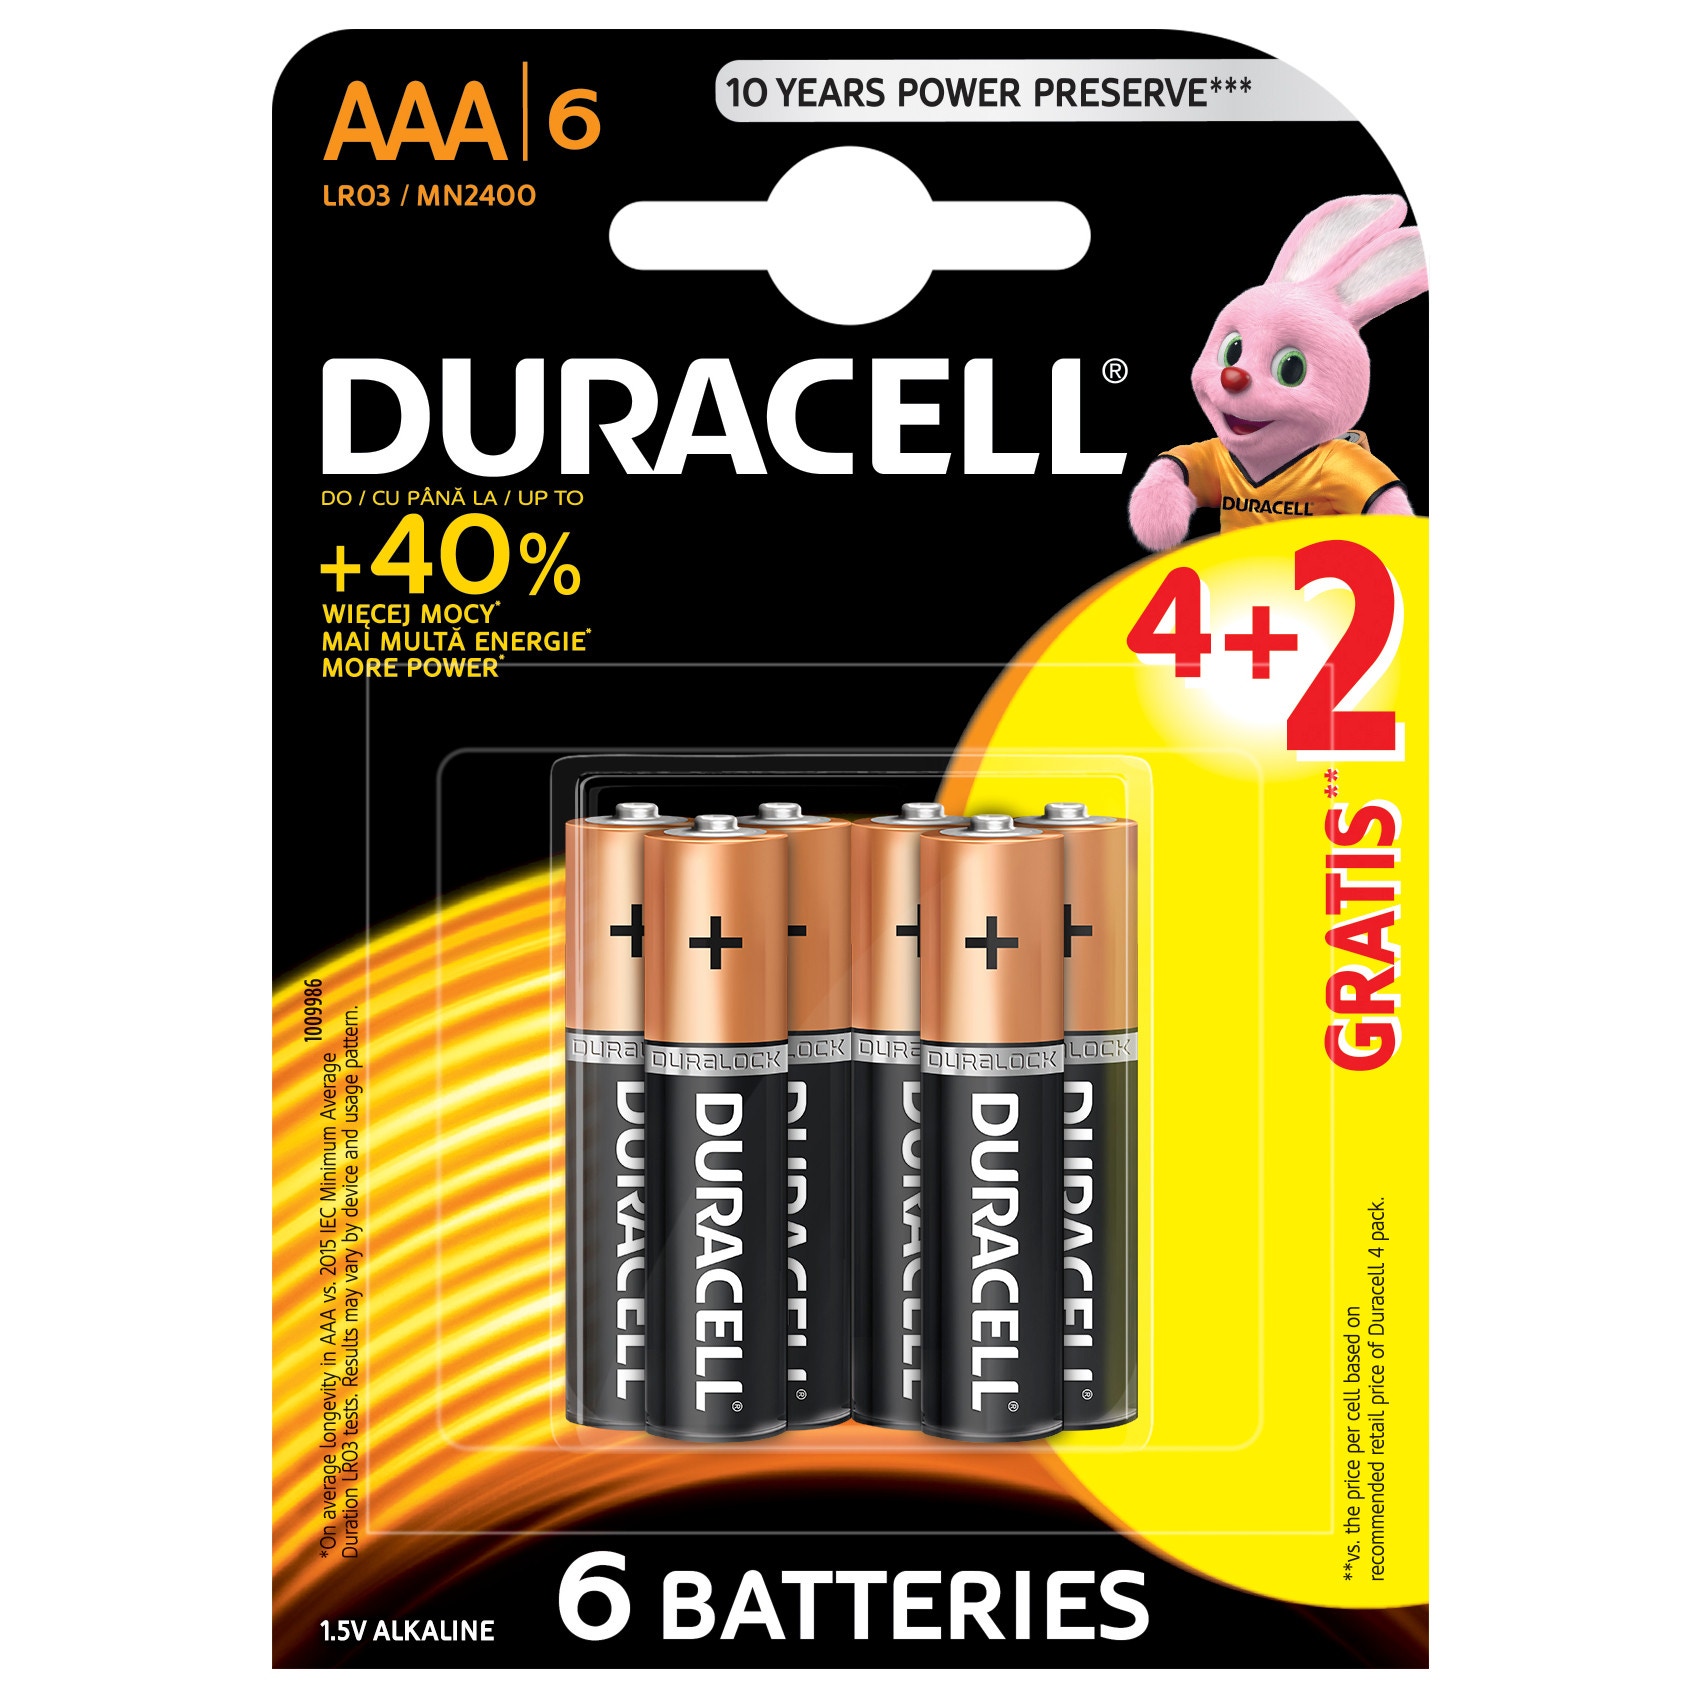 From Foster parents revenge Dedeman - Baterie Duracell Basic, AAA, Alkaline, 4 + 2 buc - Dedicat  planurilor tale